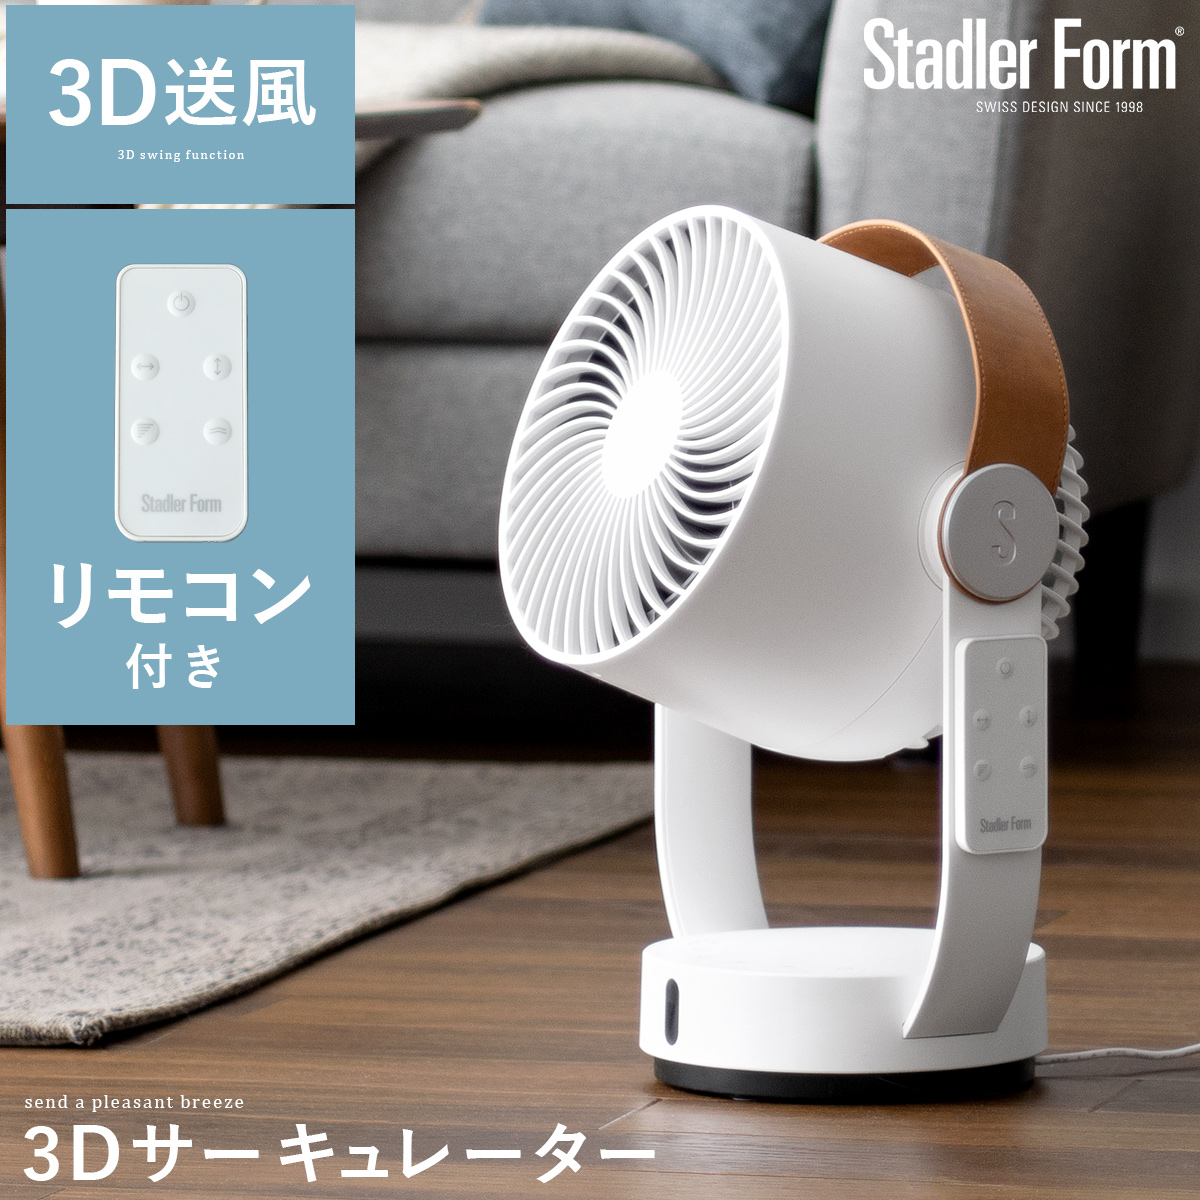 Stadler Form(スタドラフォーム) 3Dサーキュレーター Leo(レオ)